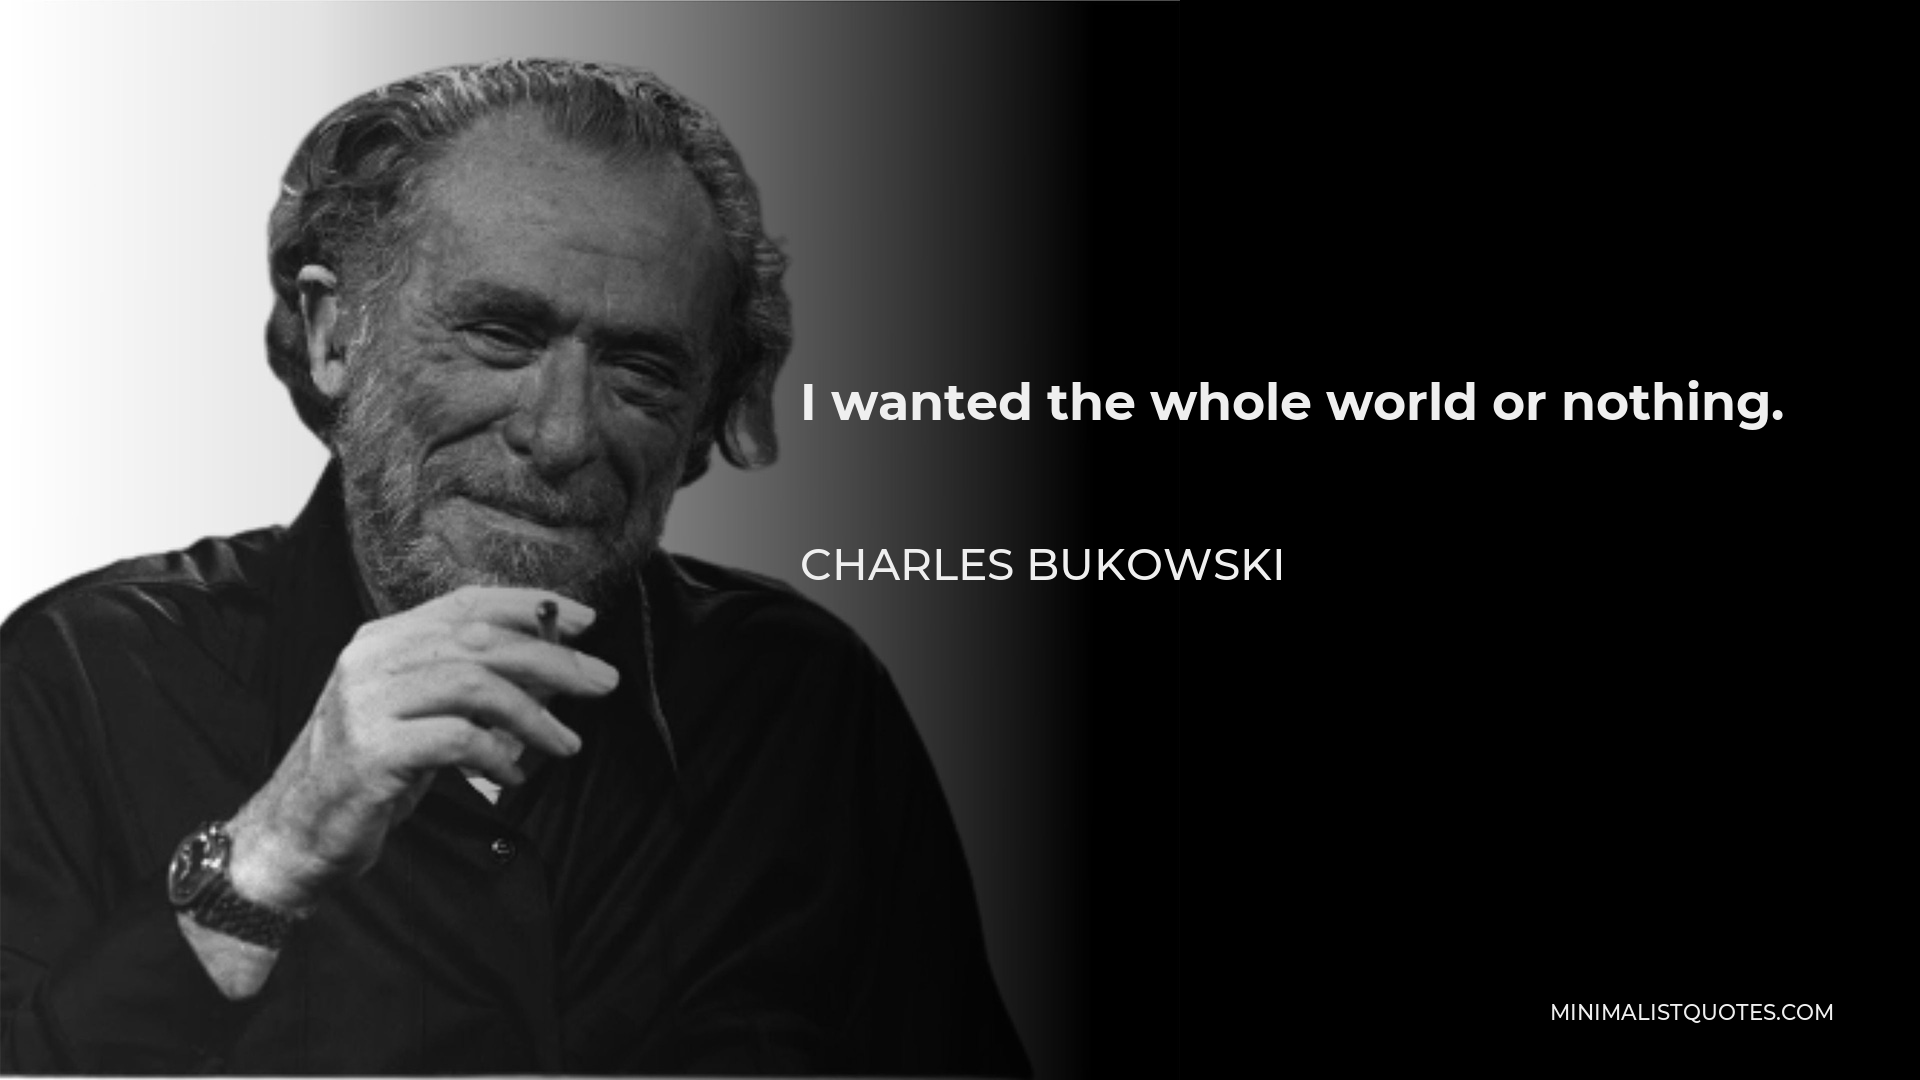 Charles Bukowski Quote - I wanted the whole world or nothing.